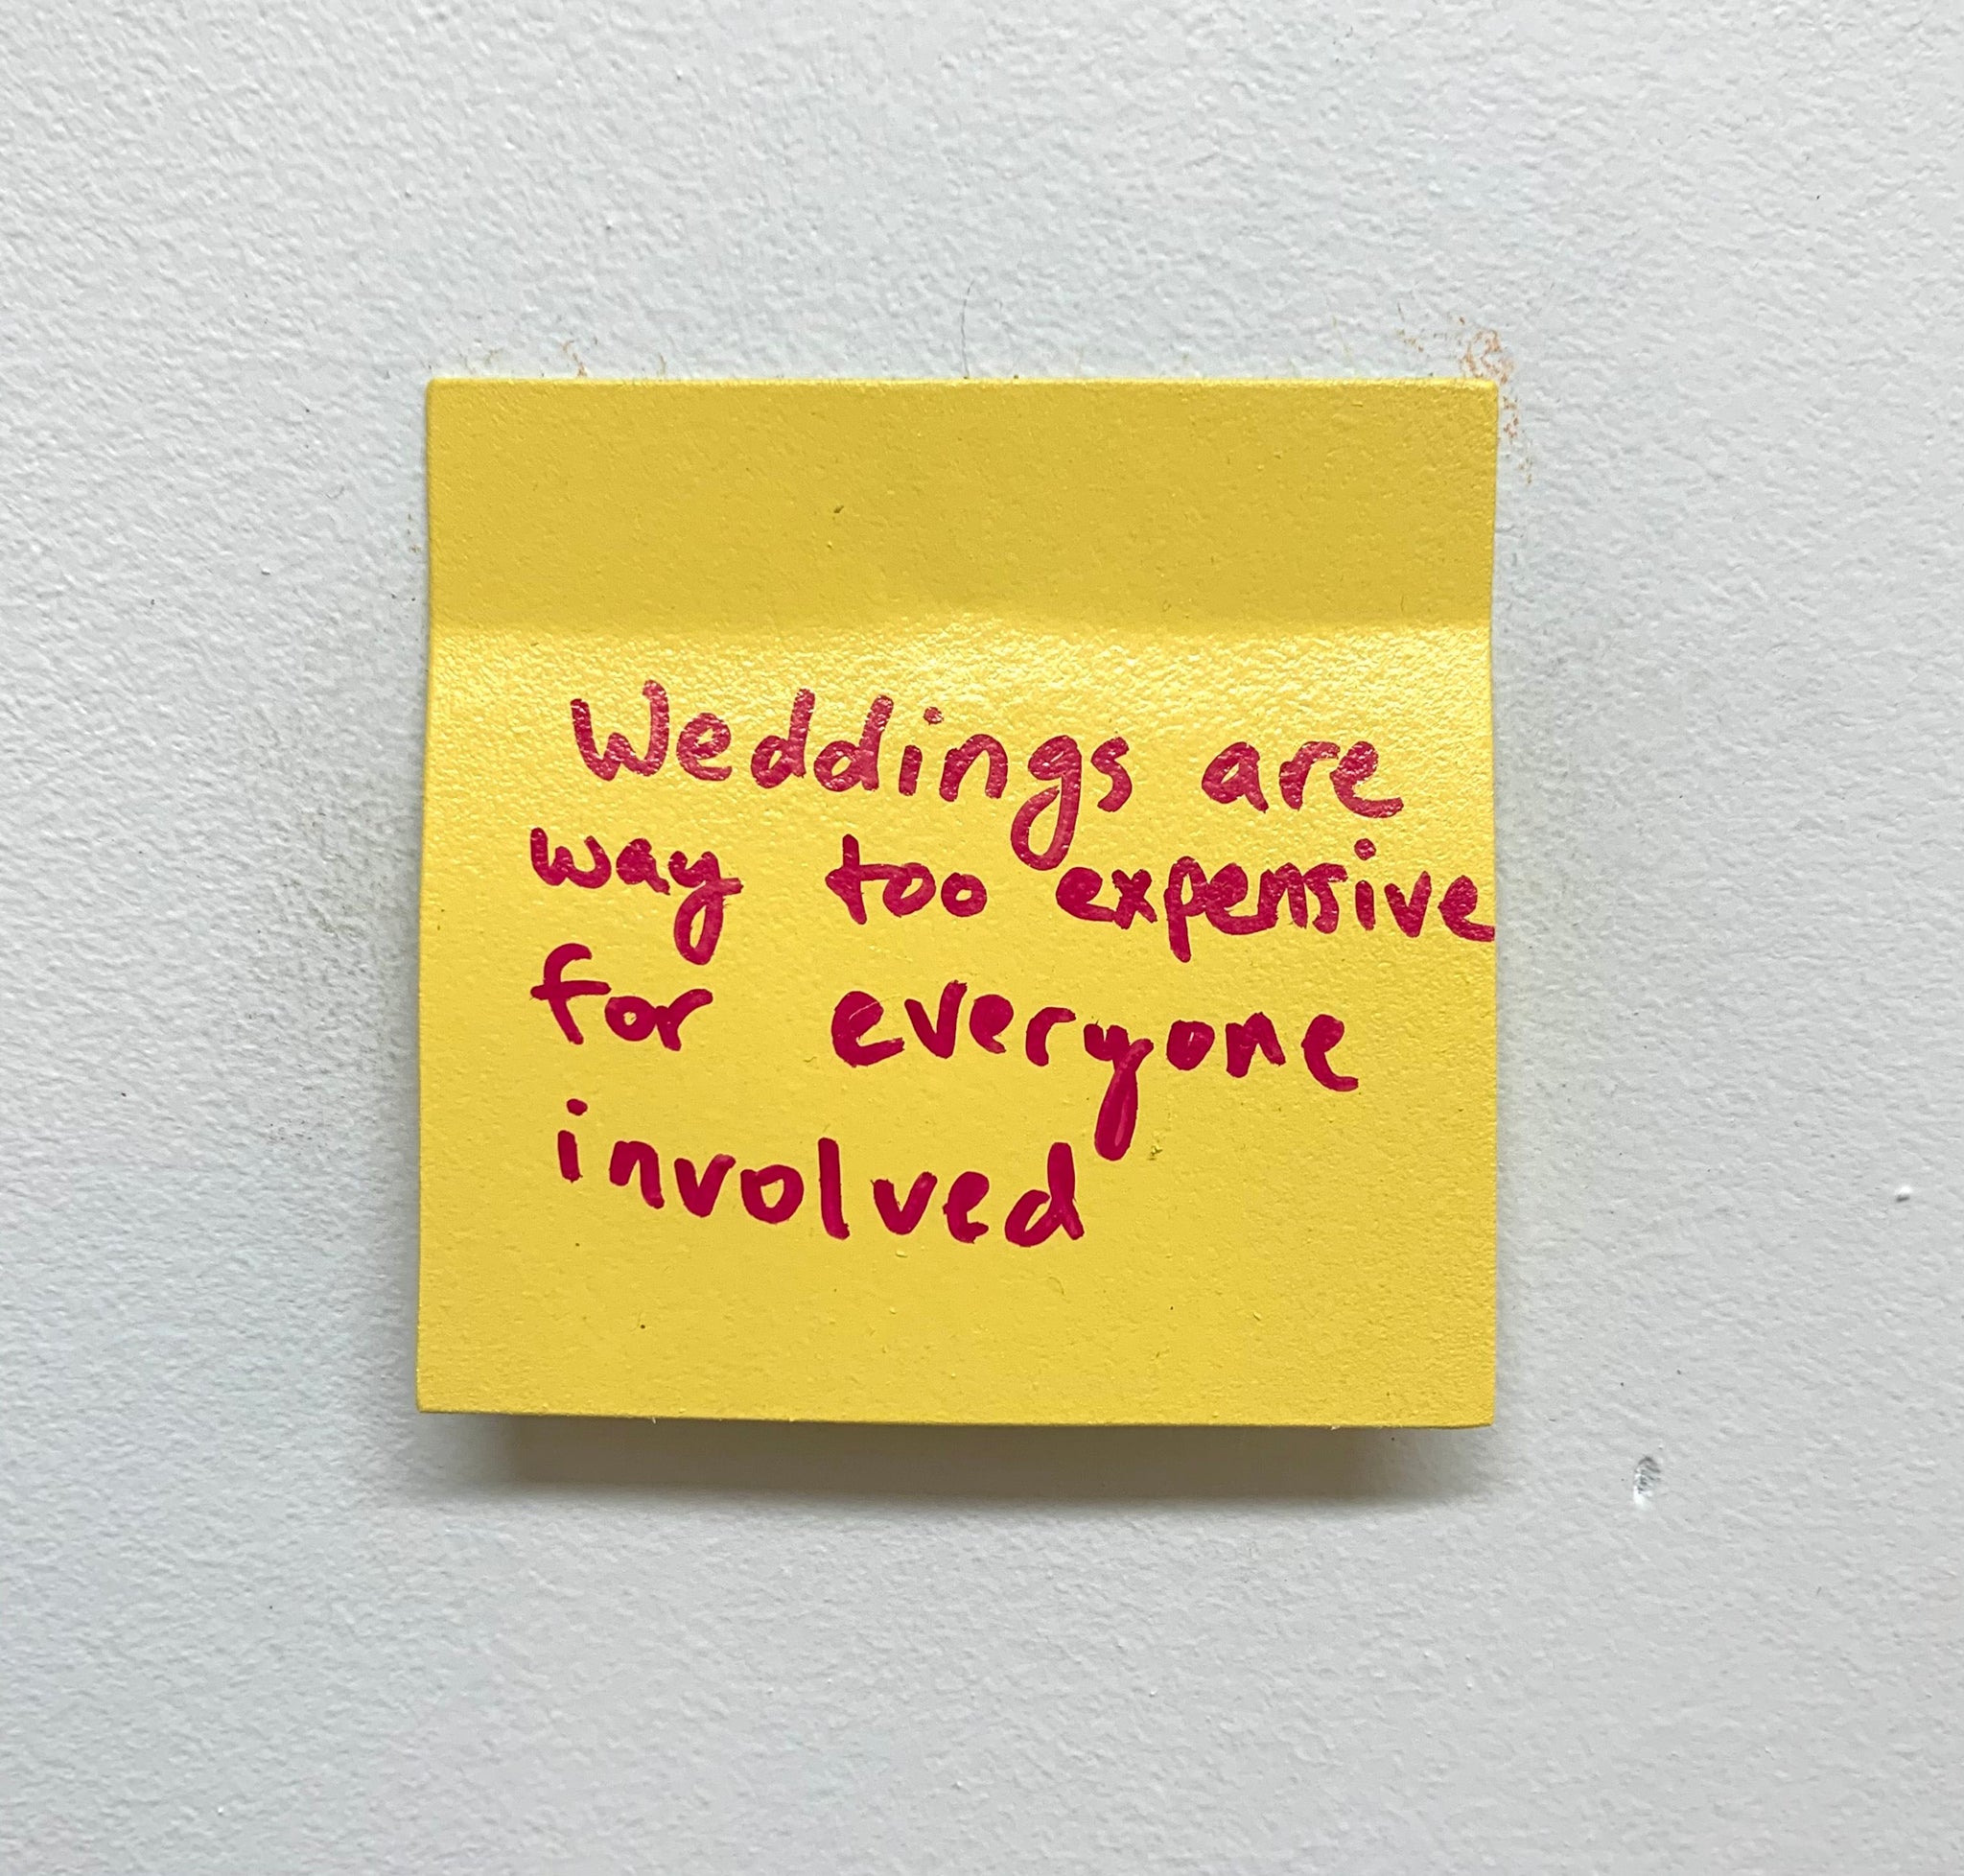 Stuart Lantry, "Weddings are too expensive"